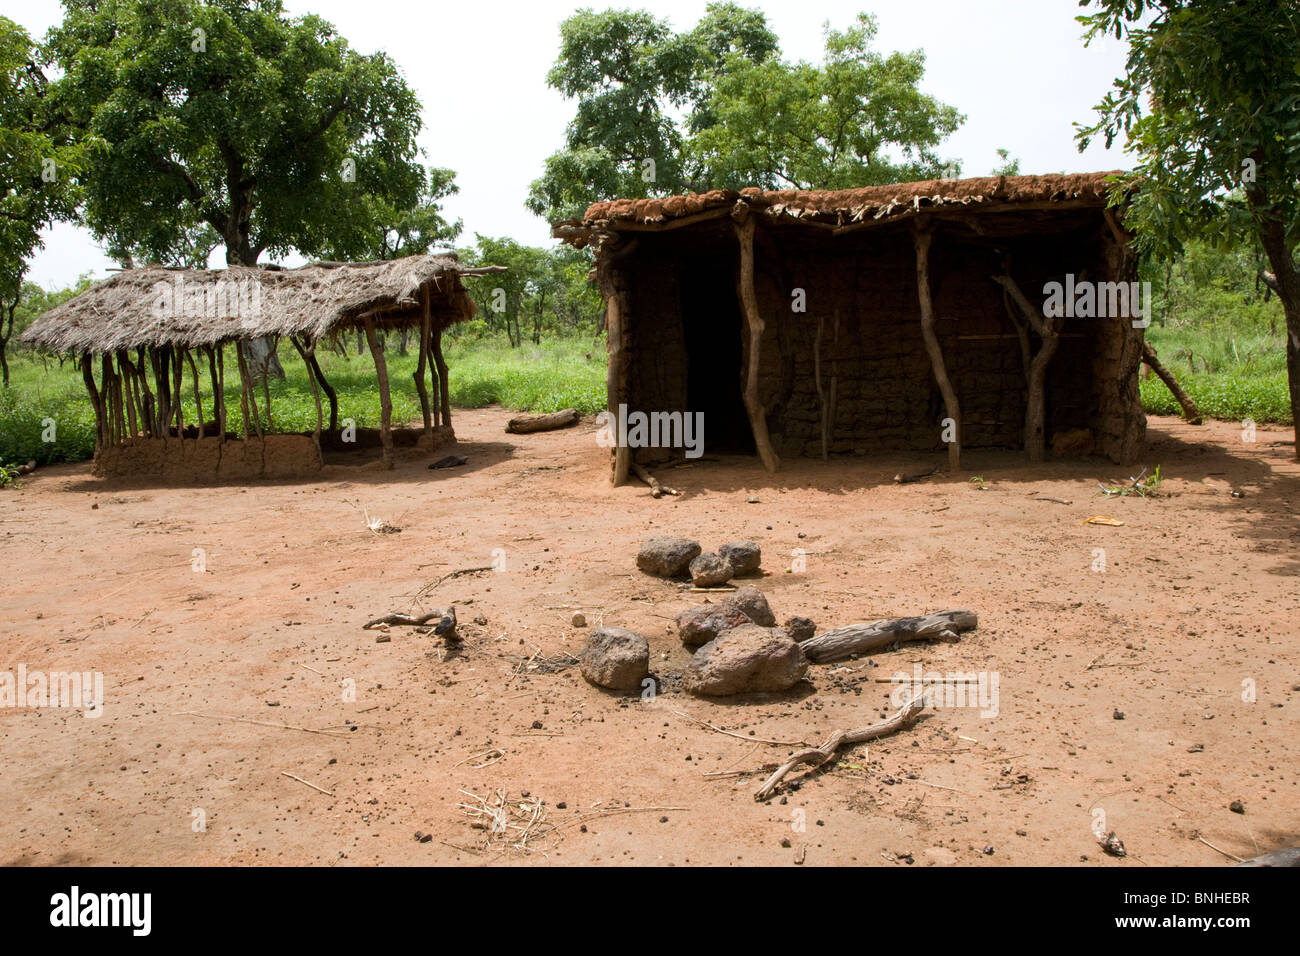 Abandoned homestead in the Gonja triangle, Damango district, Ghana. Stock Photo